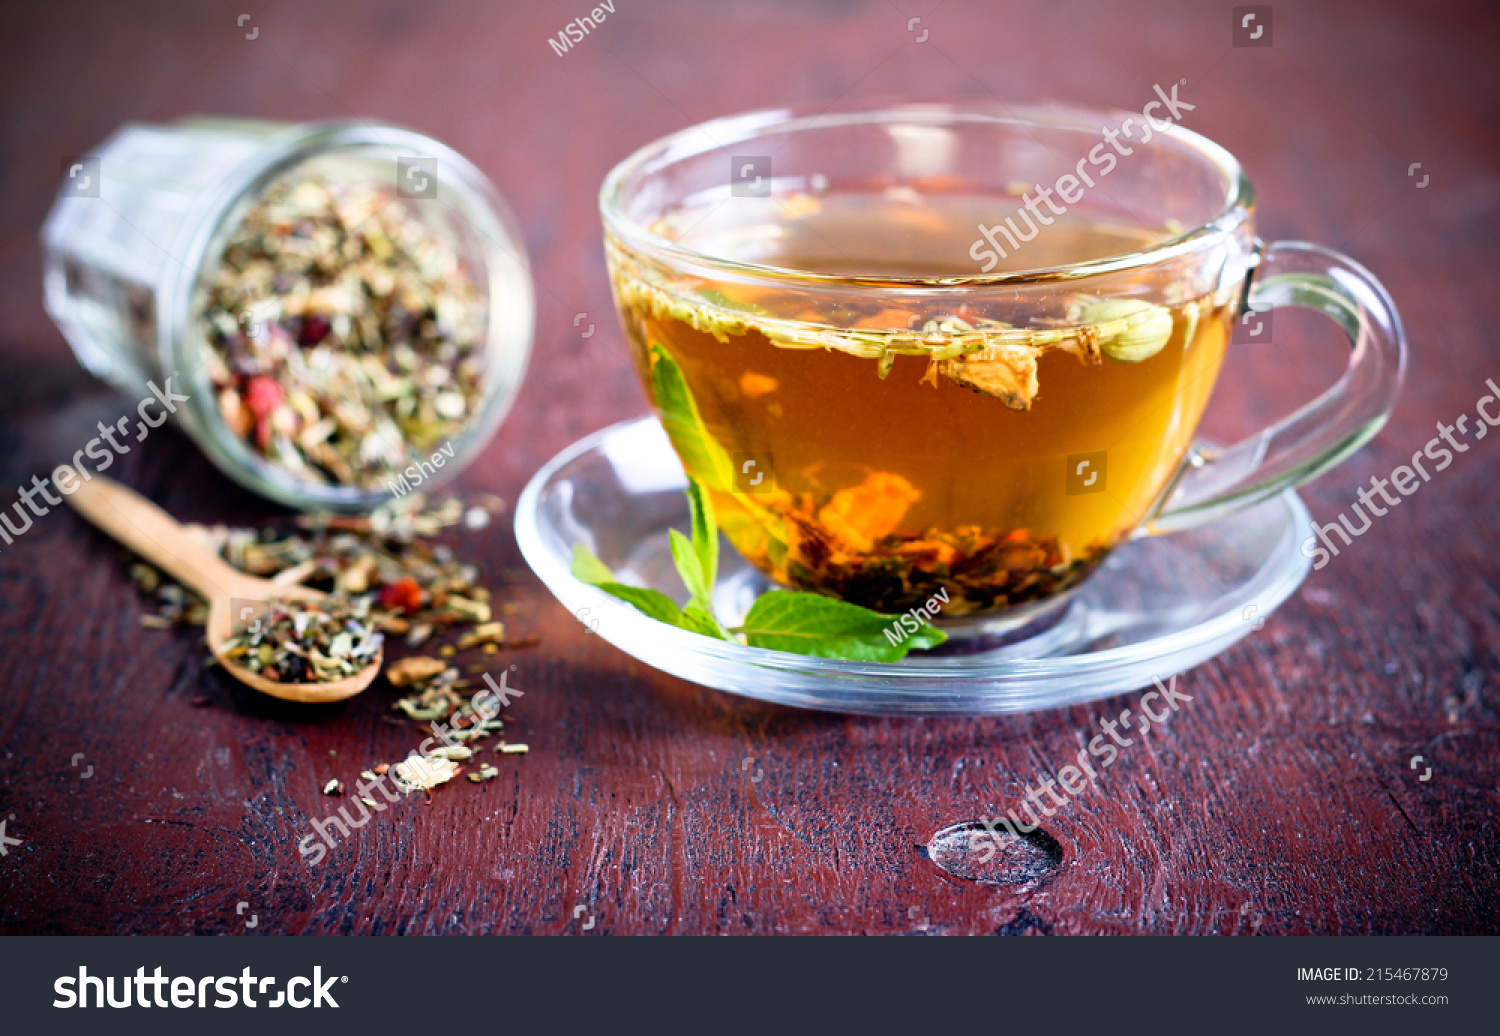 http://image.shutterstock.com/z/stock-photo-mix-of-bio-herbal-tea-215467879.jpg